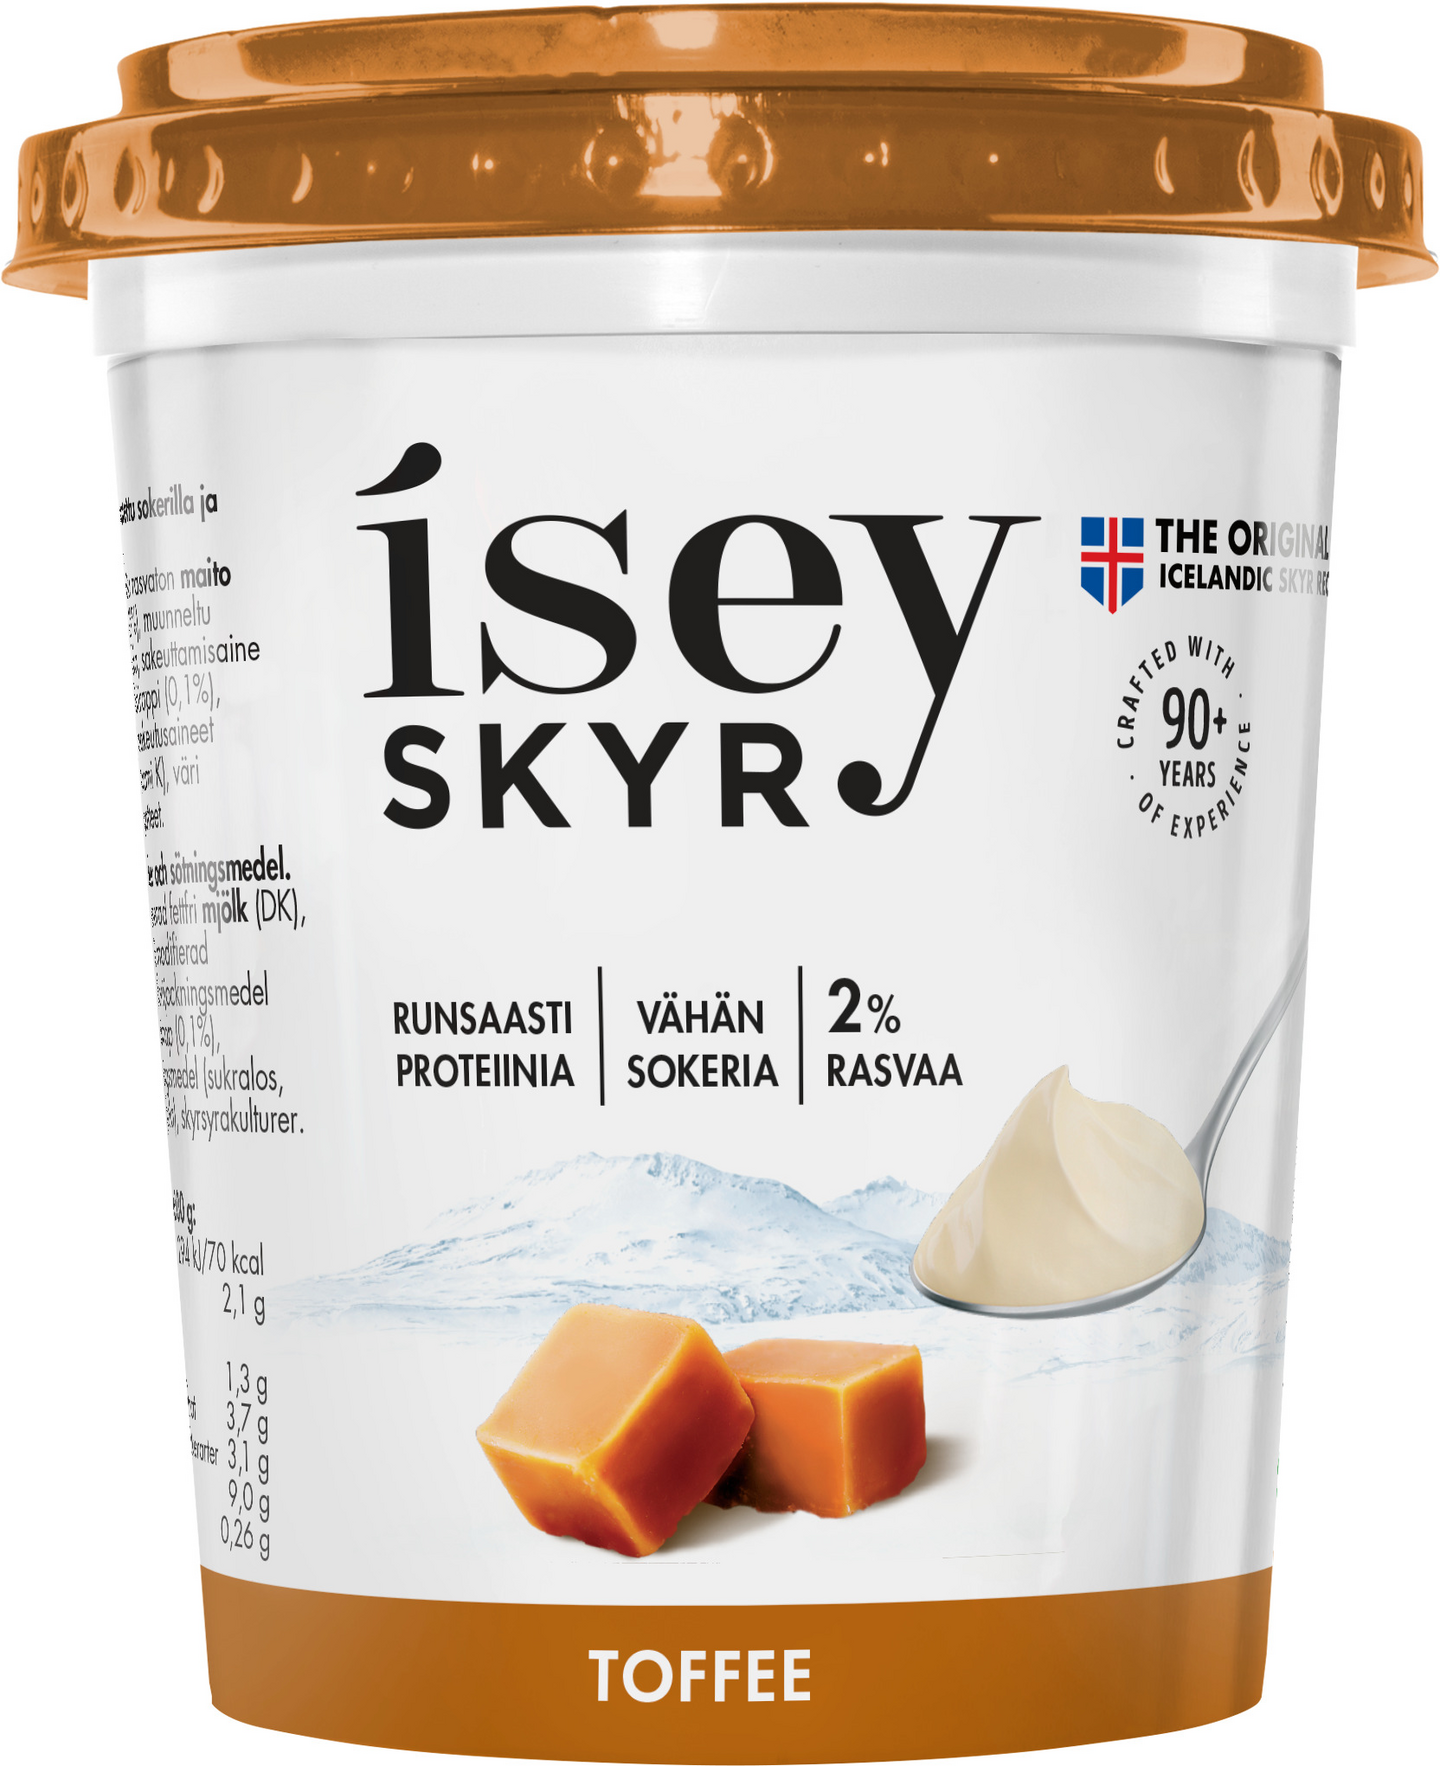 Isey Skyr toffee 400g